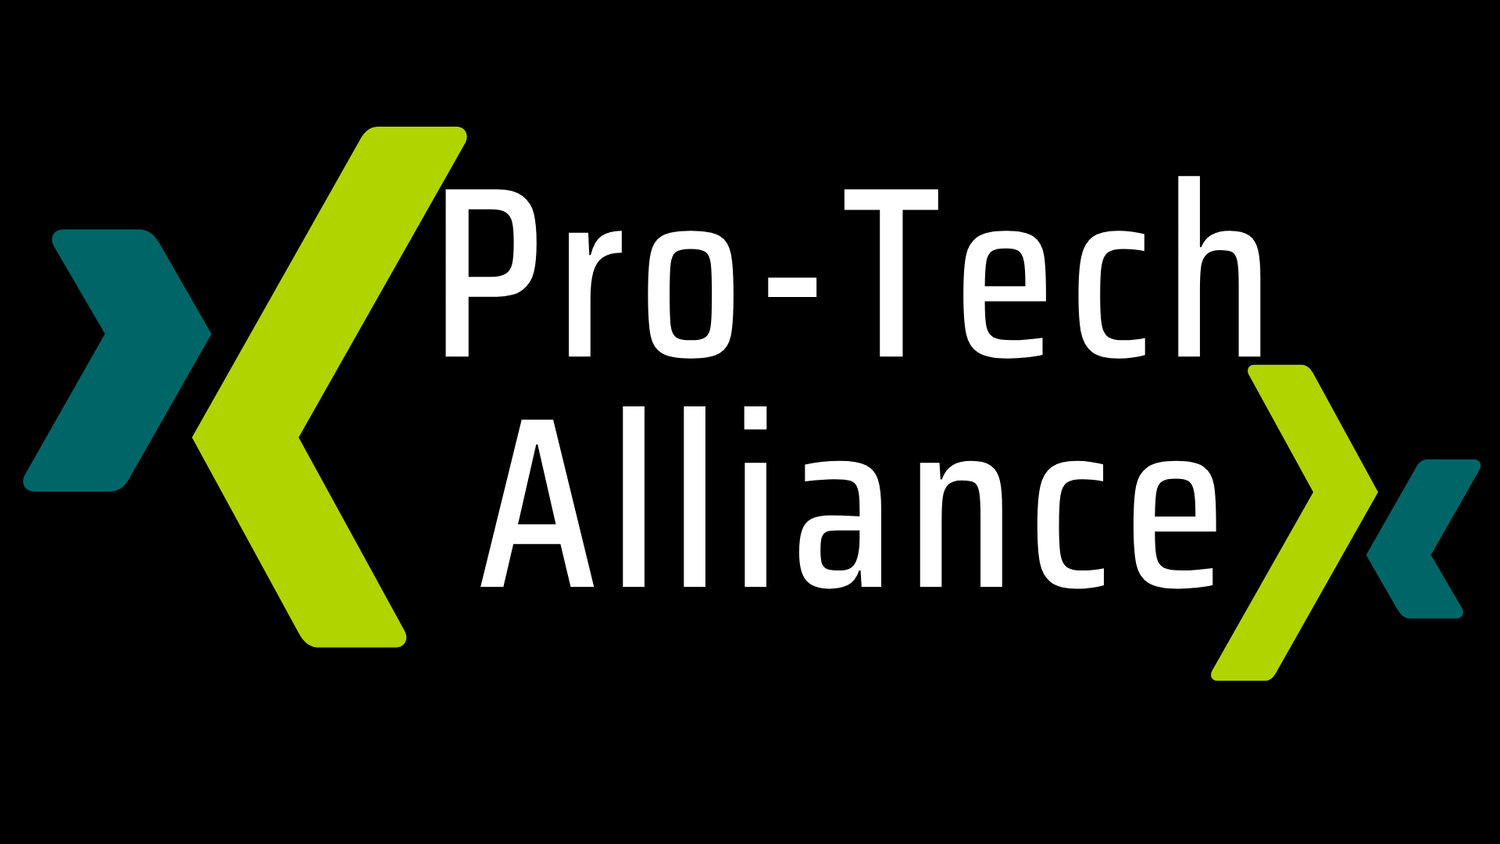 Pro-Tech Alliance